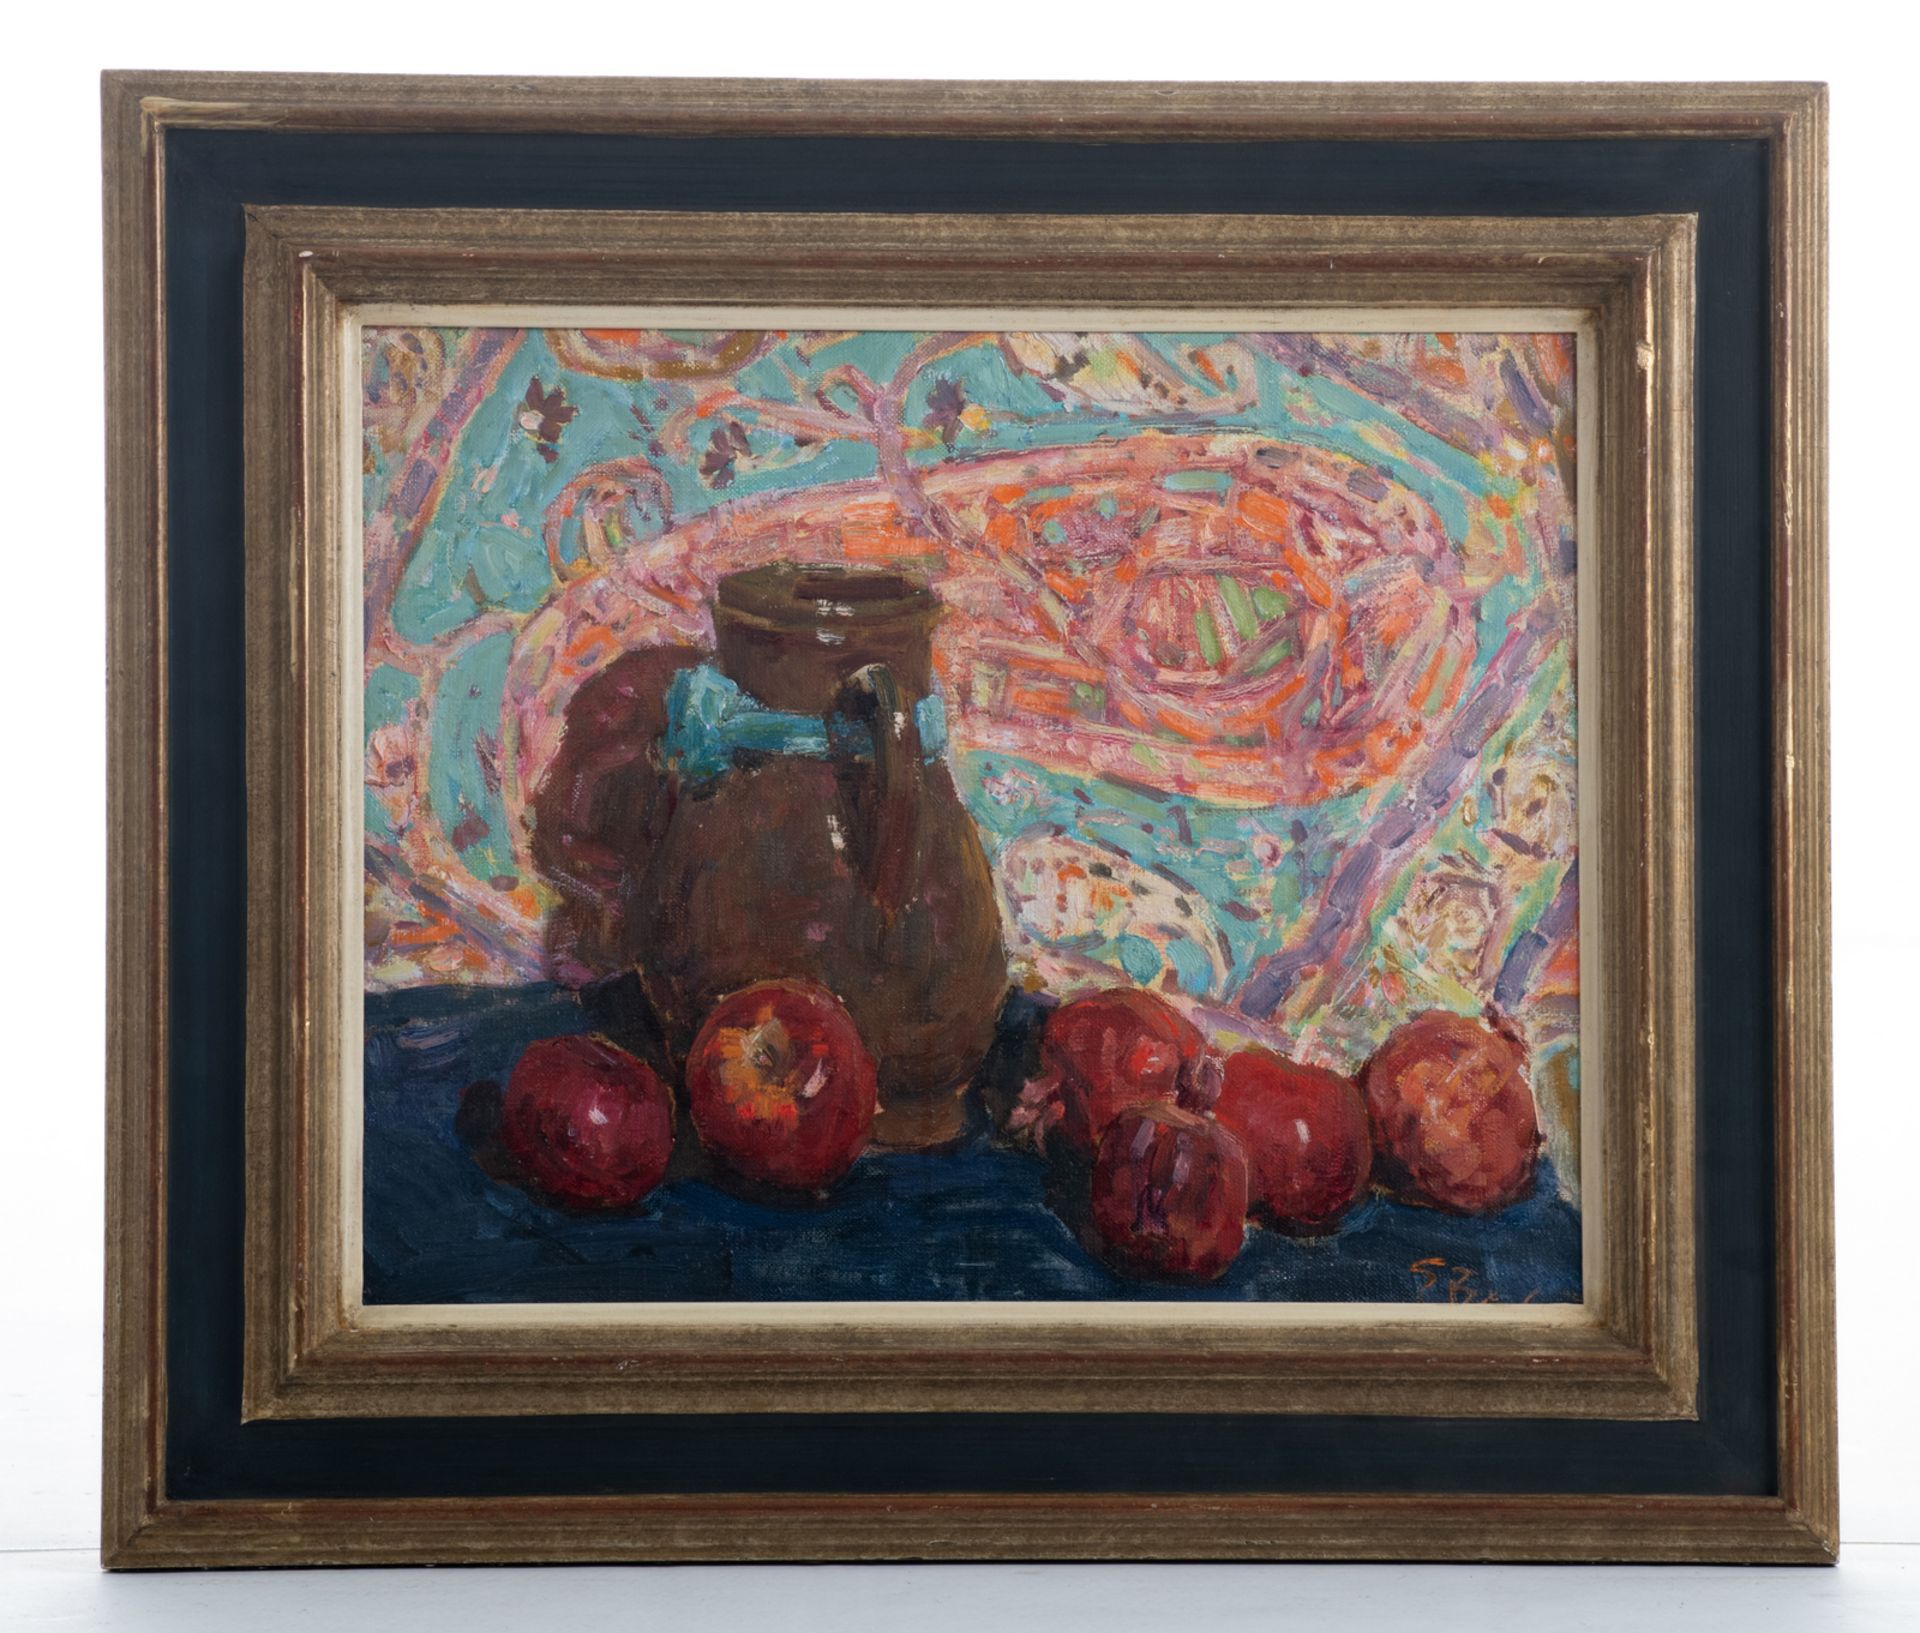 Vechtomov E., a still life with apples, oil on canvas, dated 2003, 40 x 49,5 cm - Bild 2 aus 5